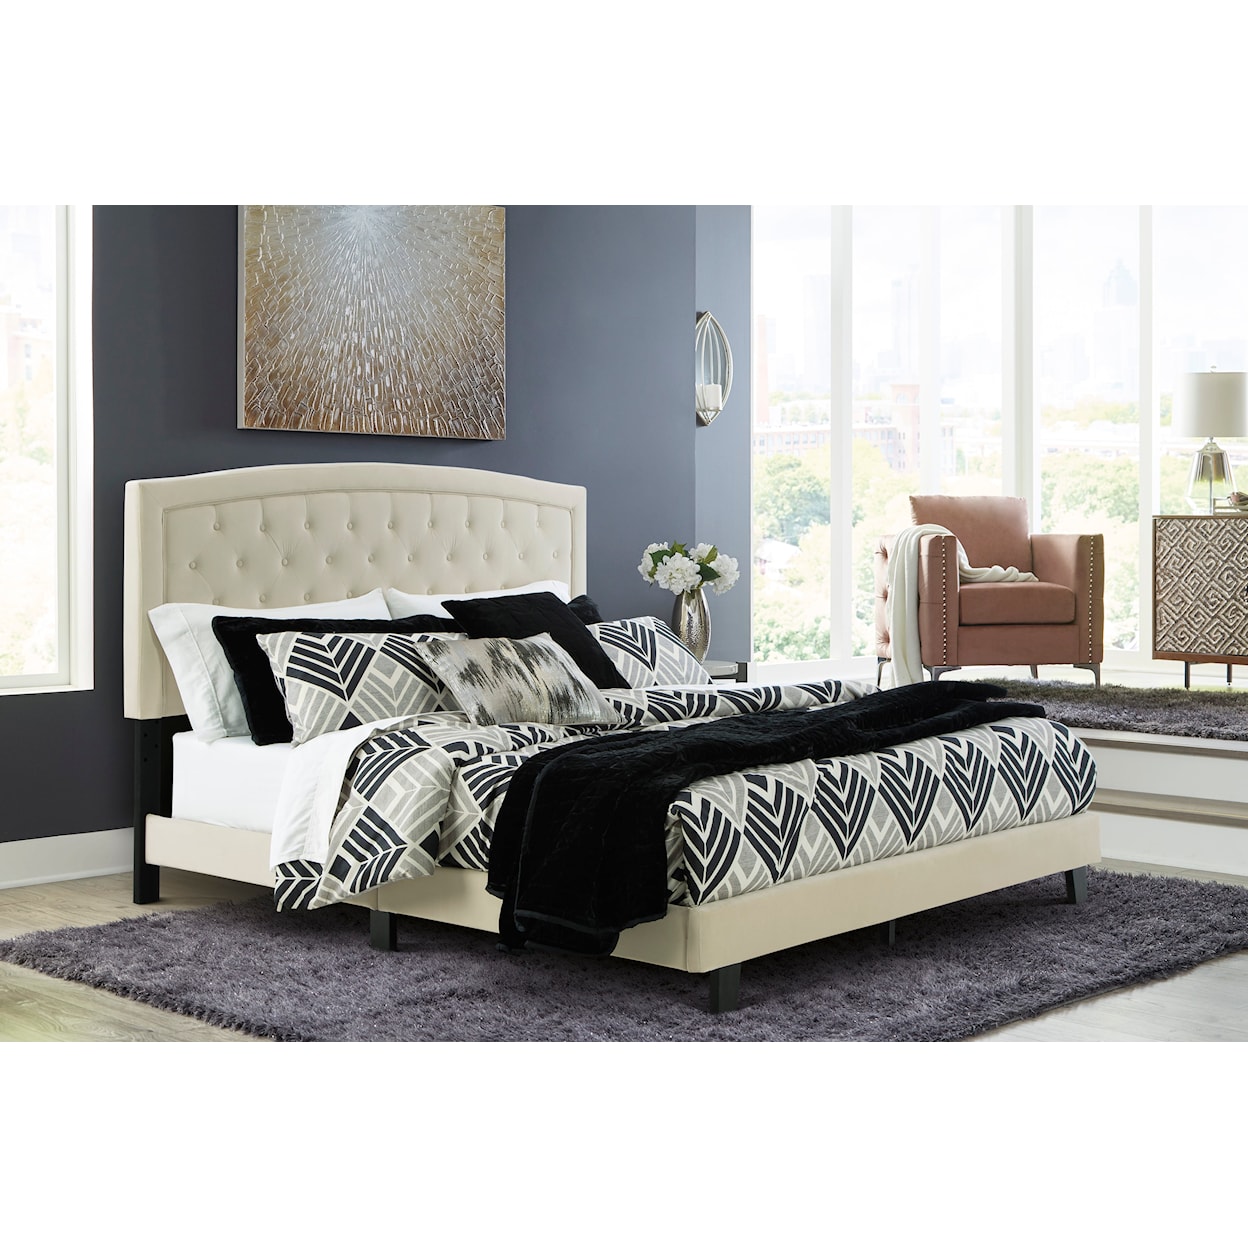 Ashley Signature Design Adelloni King Upholstered Bed